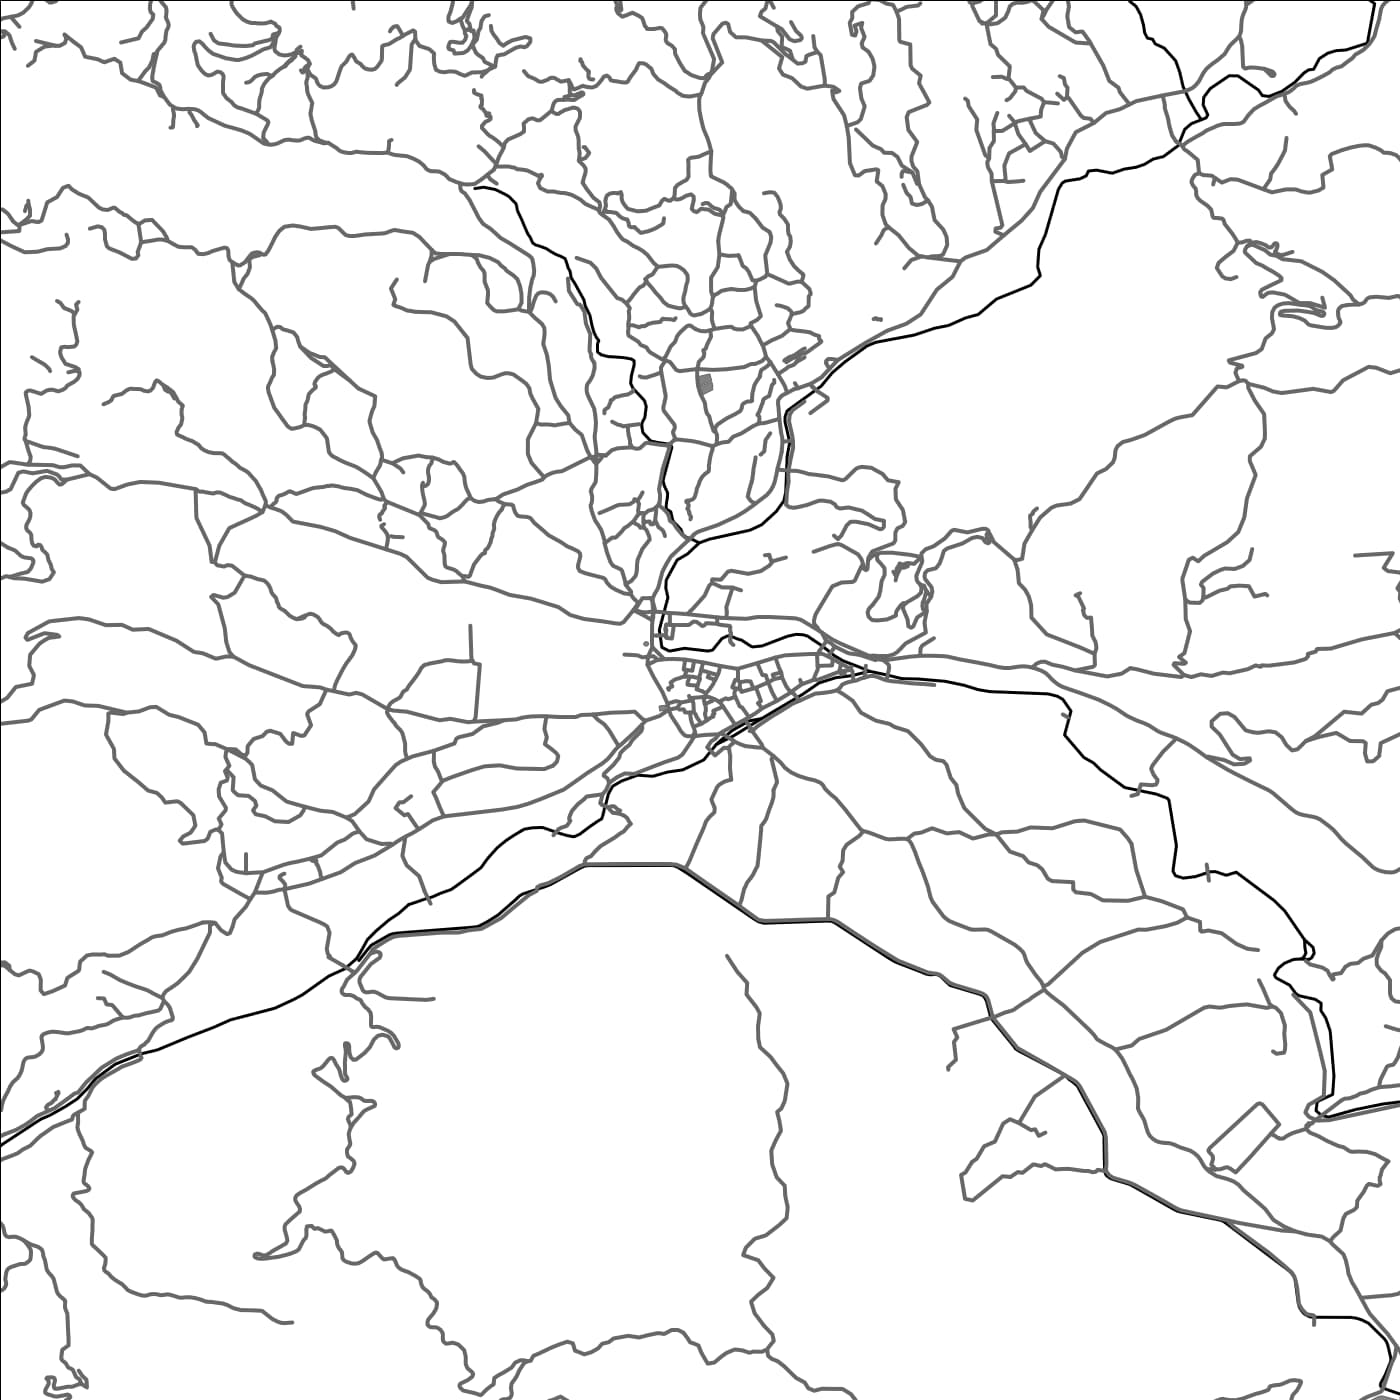 ROAD MAP OF PANAUTI, NEPAL BY MAPBAKES